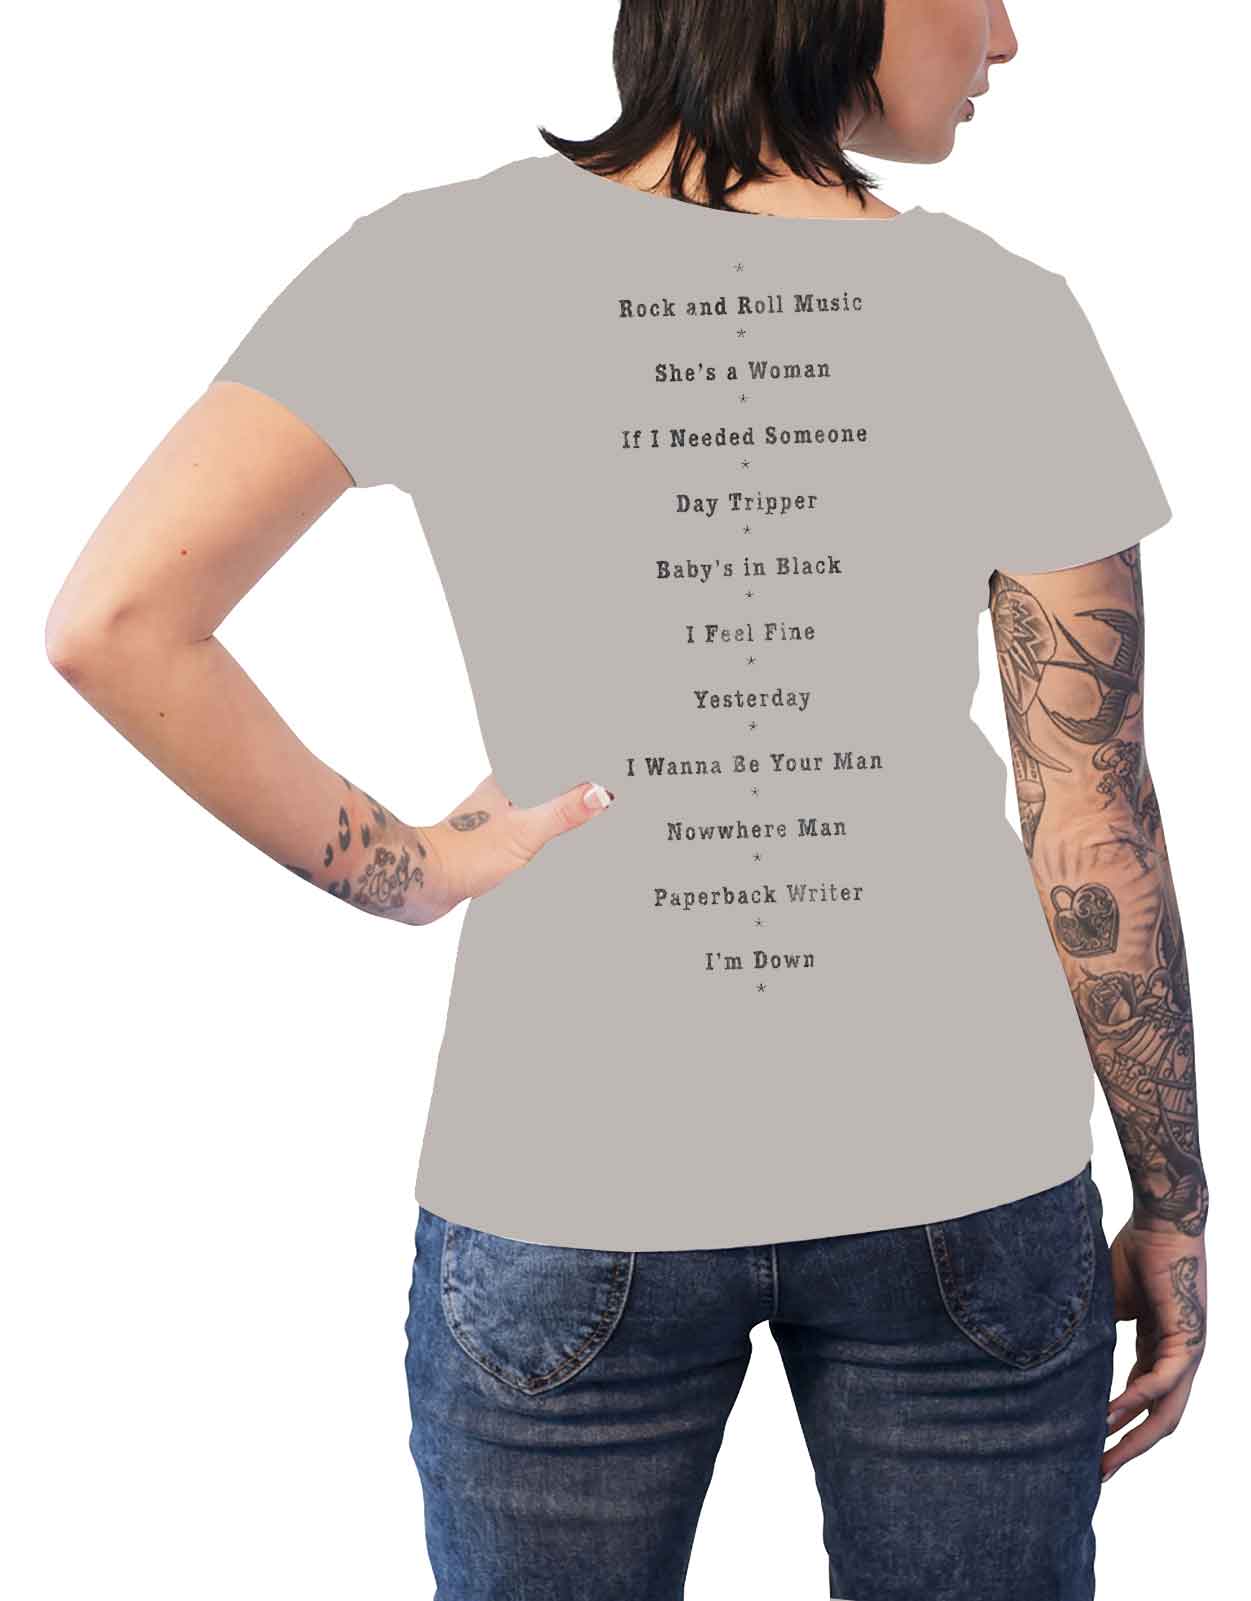 The Beatles Budokan Set List Skinny Fit T Shirt